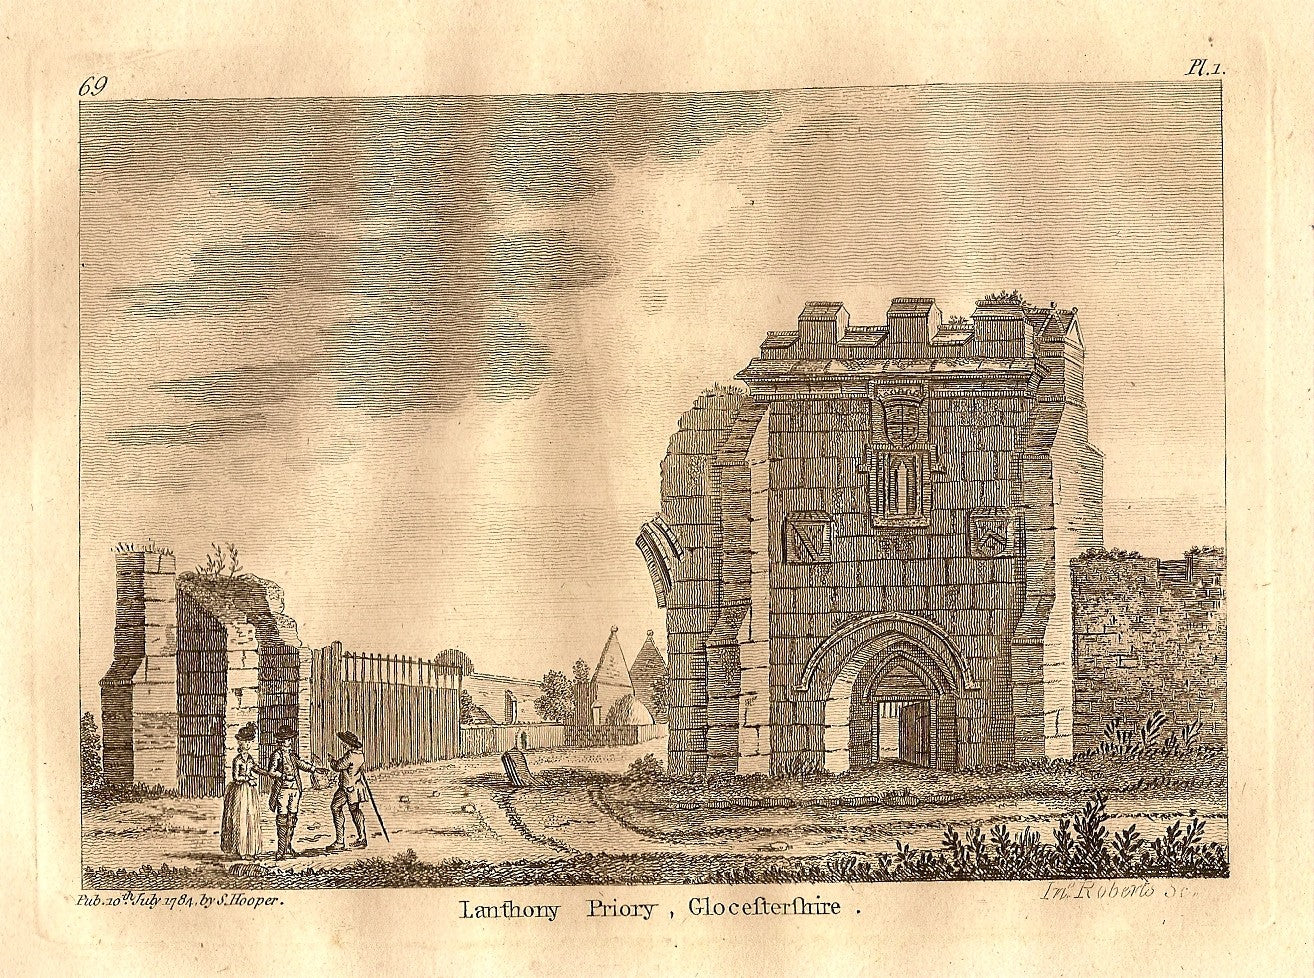 Llanthony Priory Gloucestershire antique print 1784